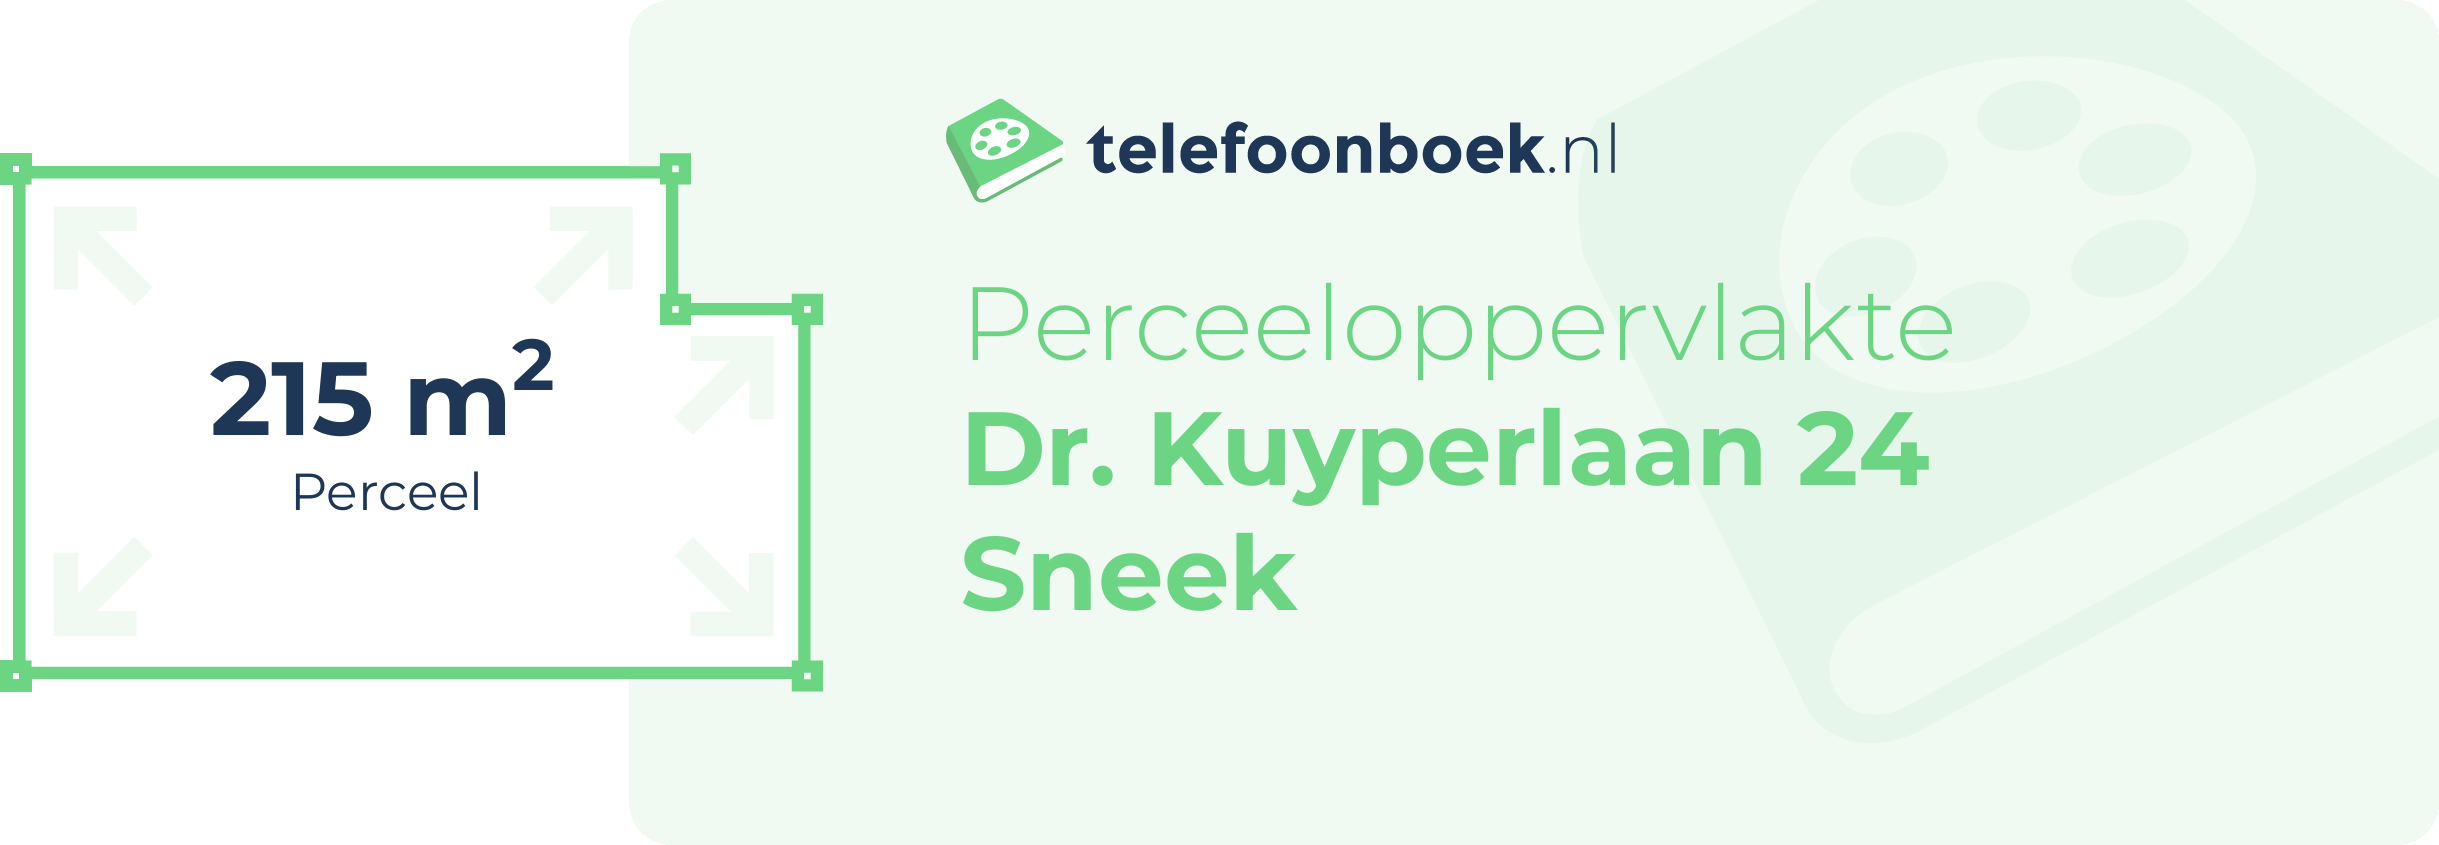 Perceeloppervlakte Dr. Kuyperlaan 24 Sneek